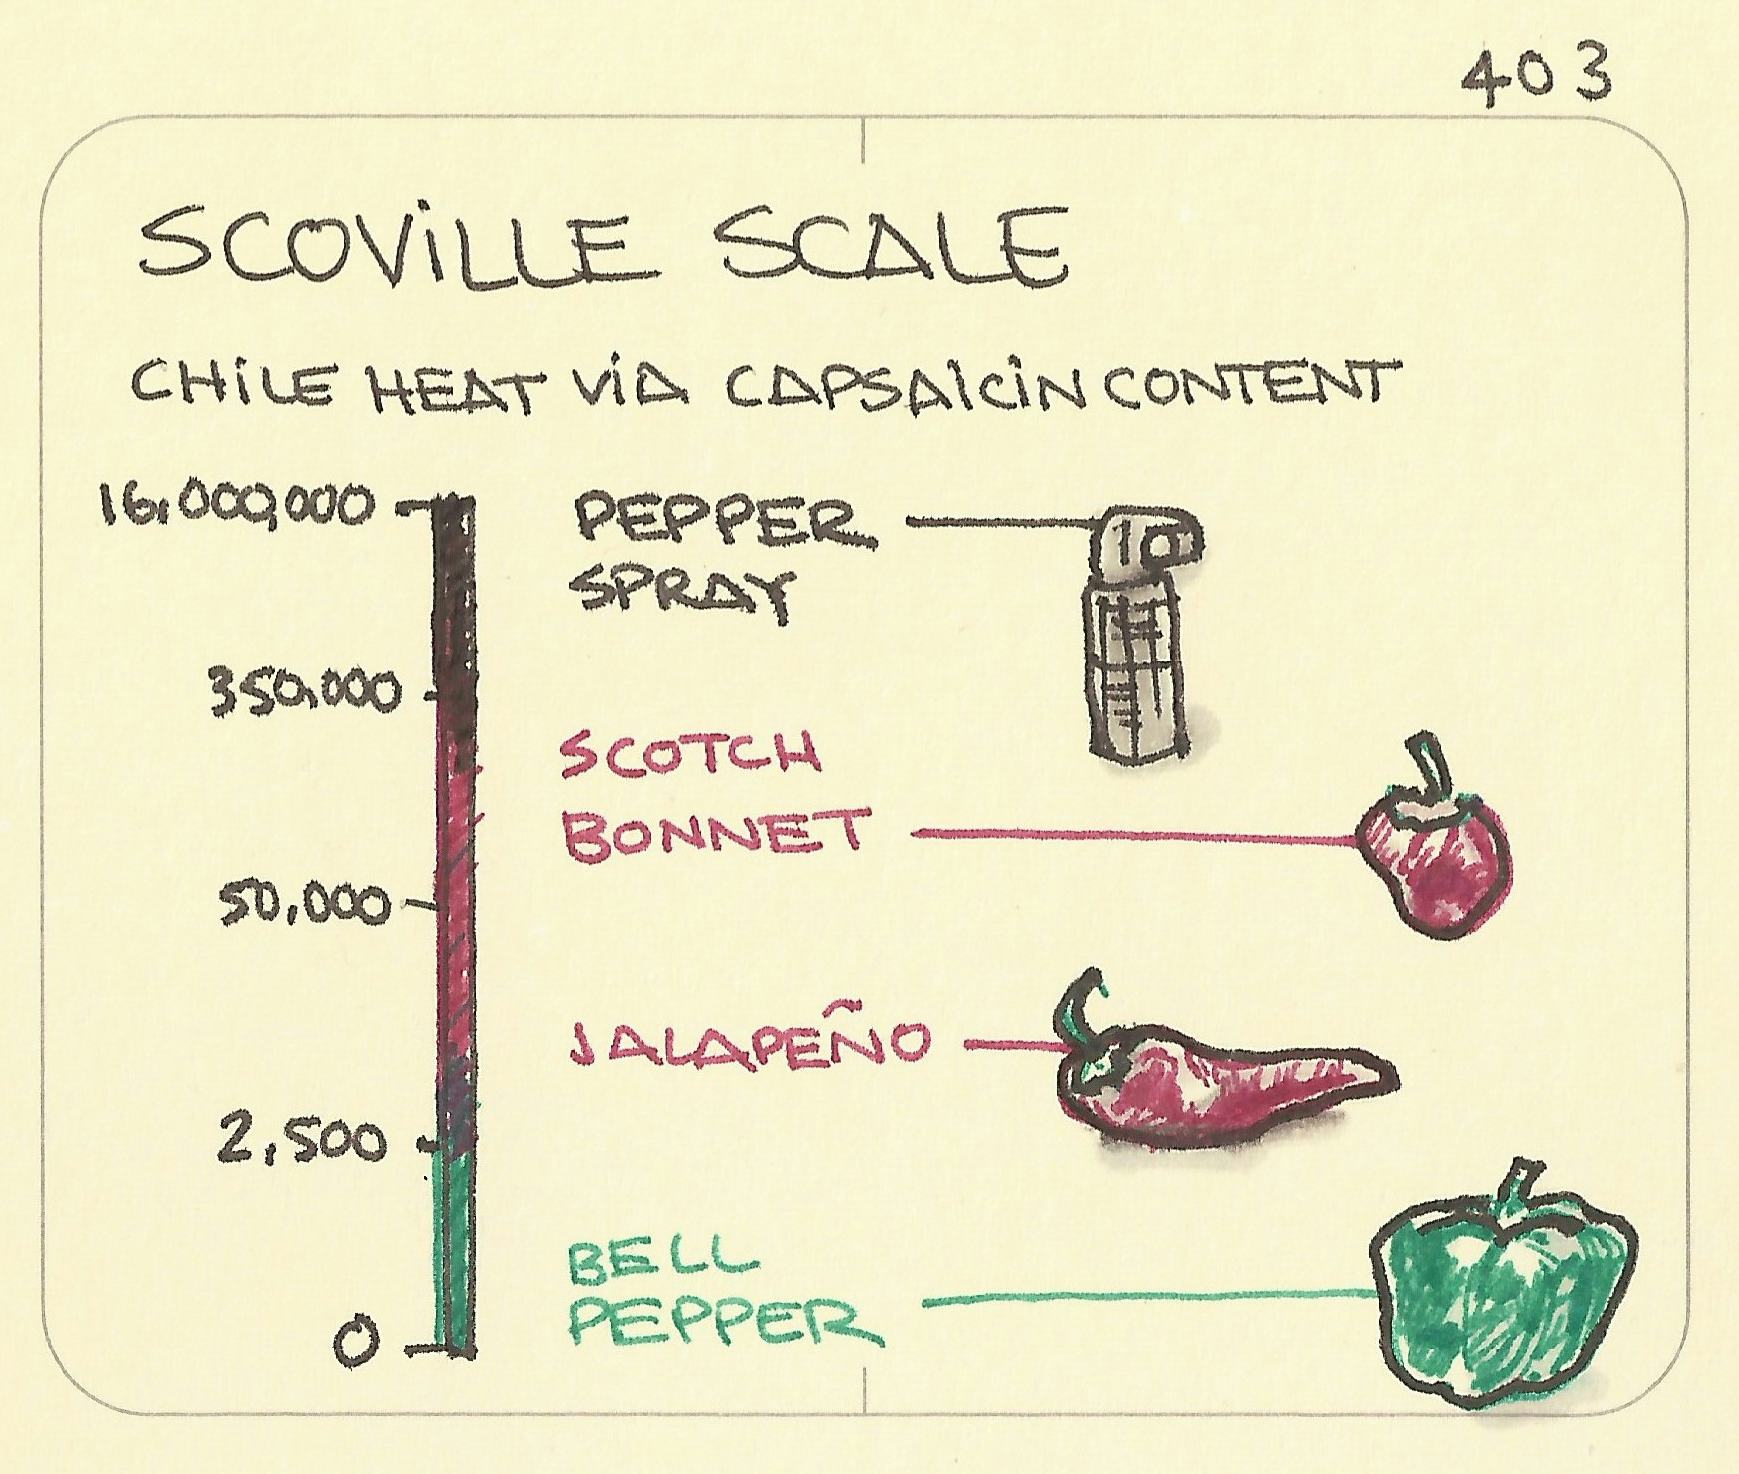 Scoville scale: chile heat via capsaicin content - Sketchplanations